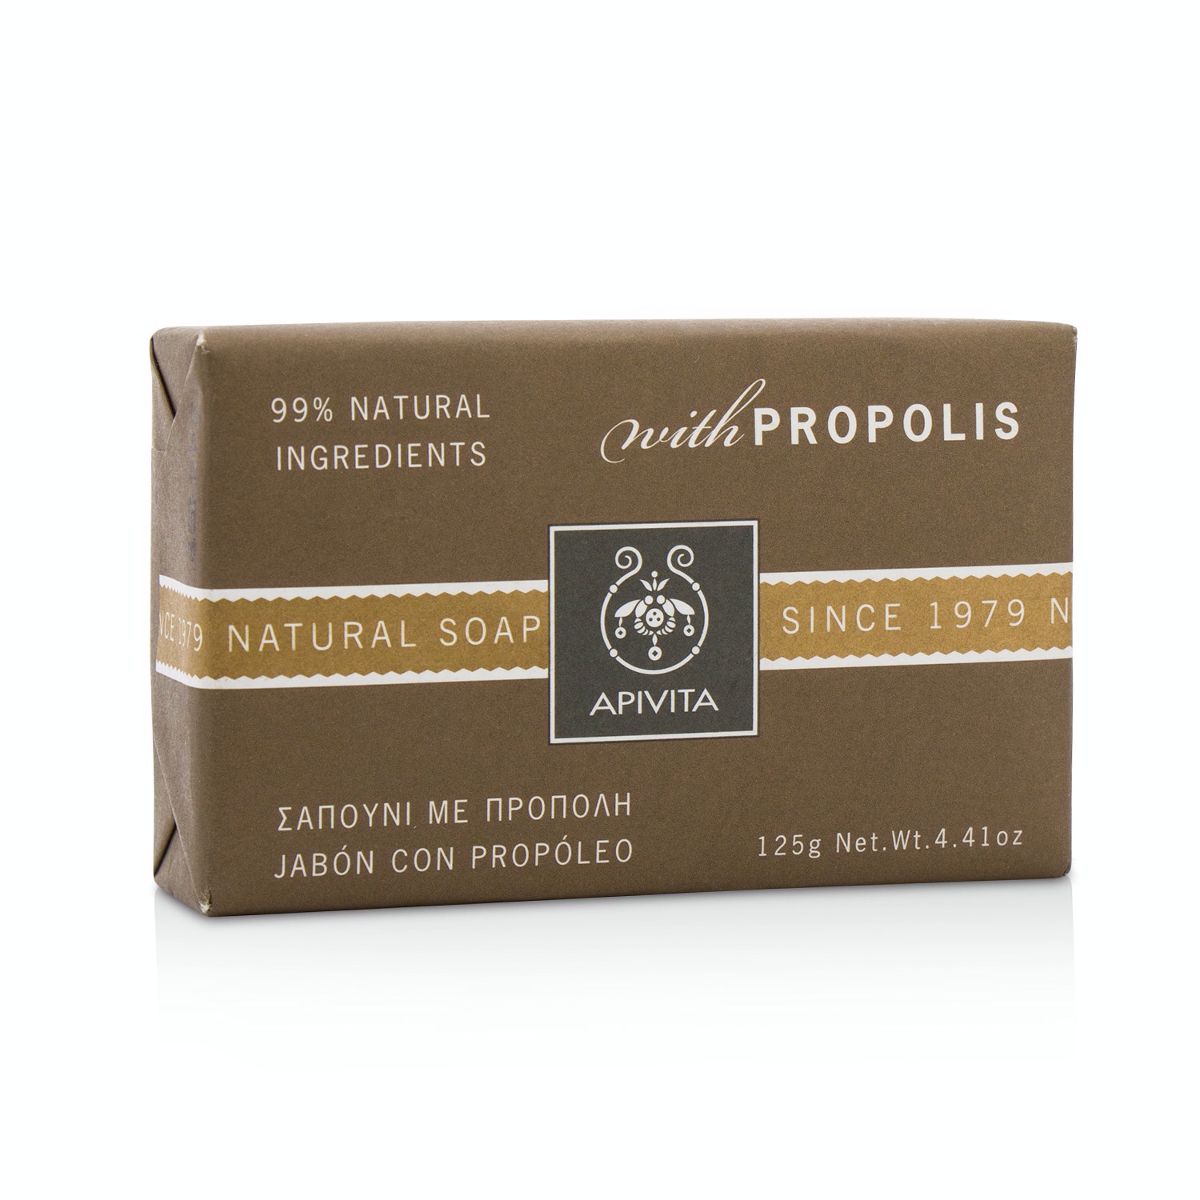 Natural Soap With Propolis Apivita Image